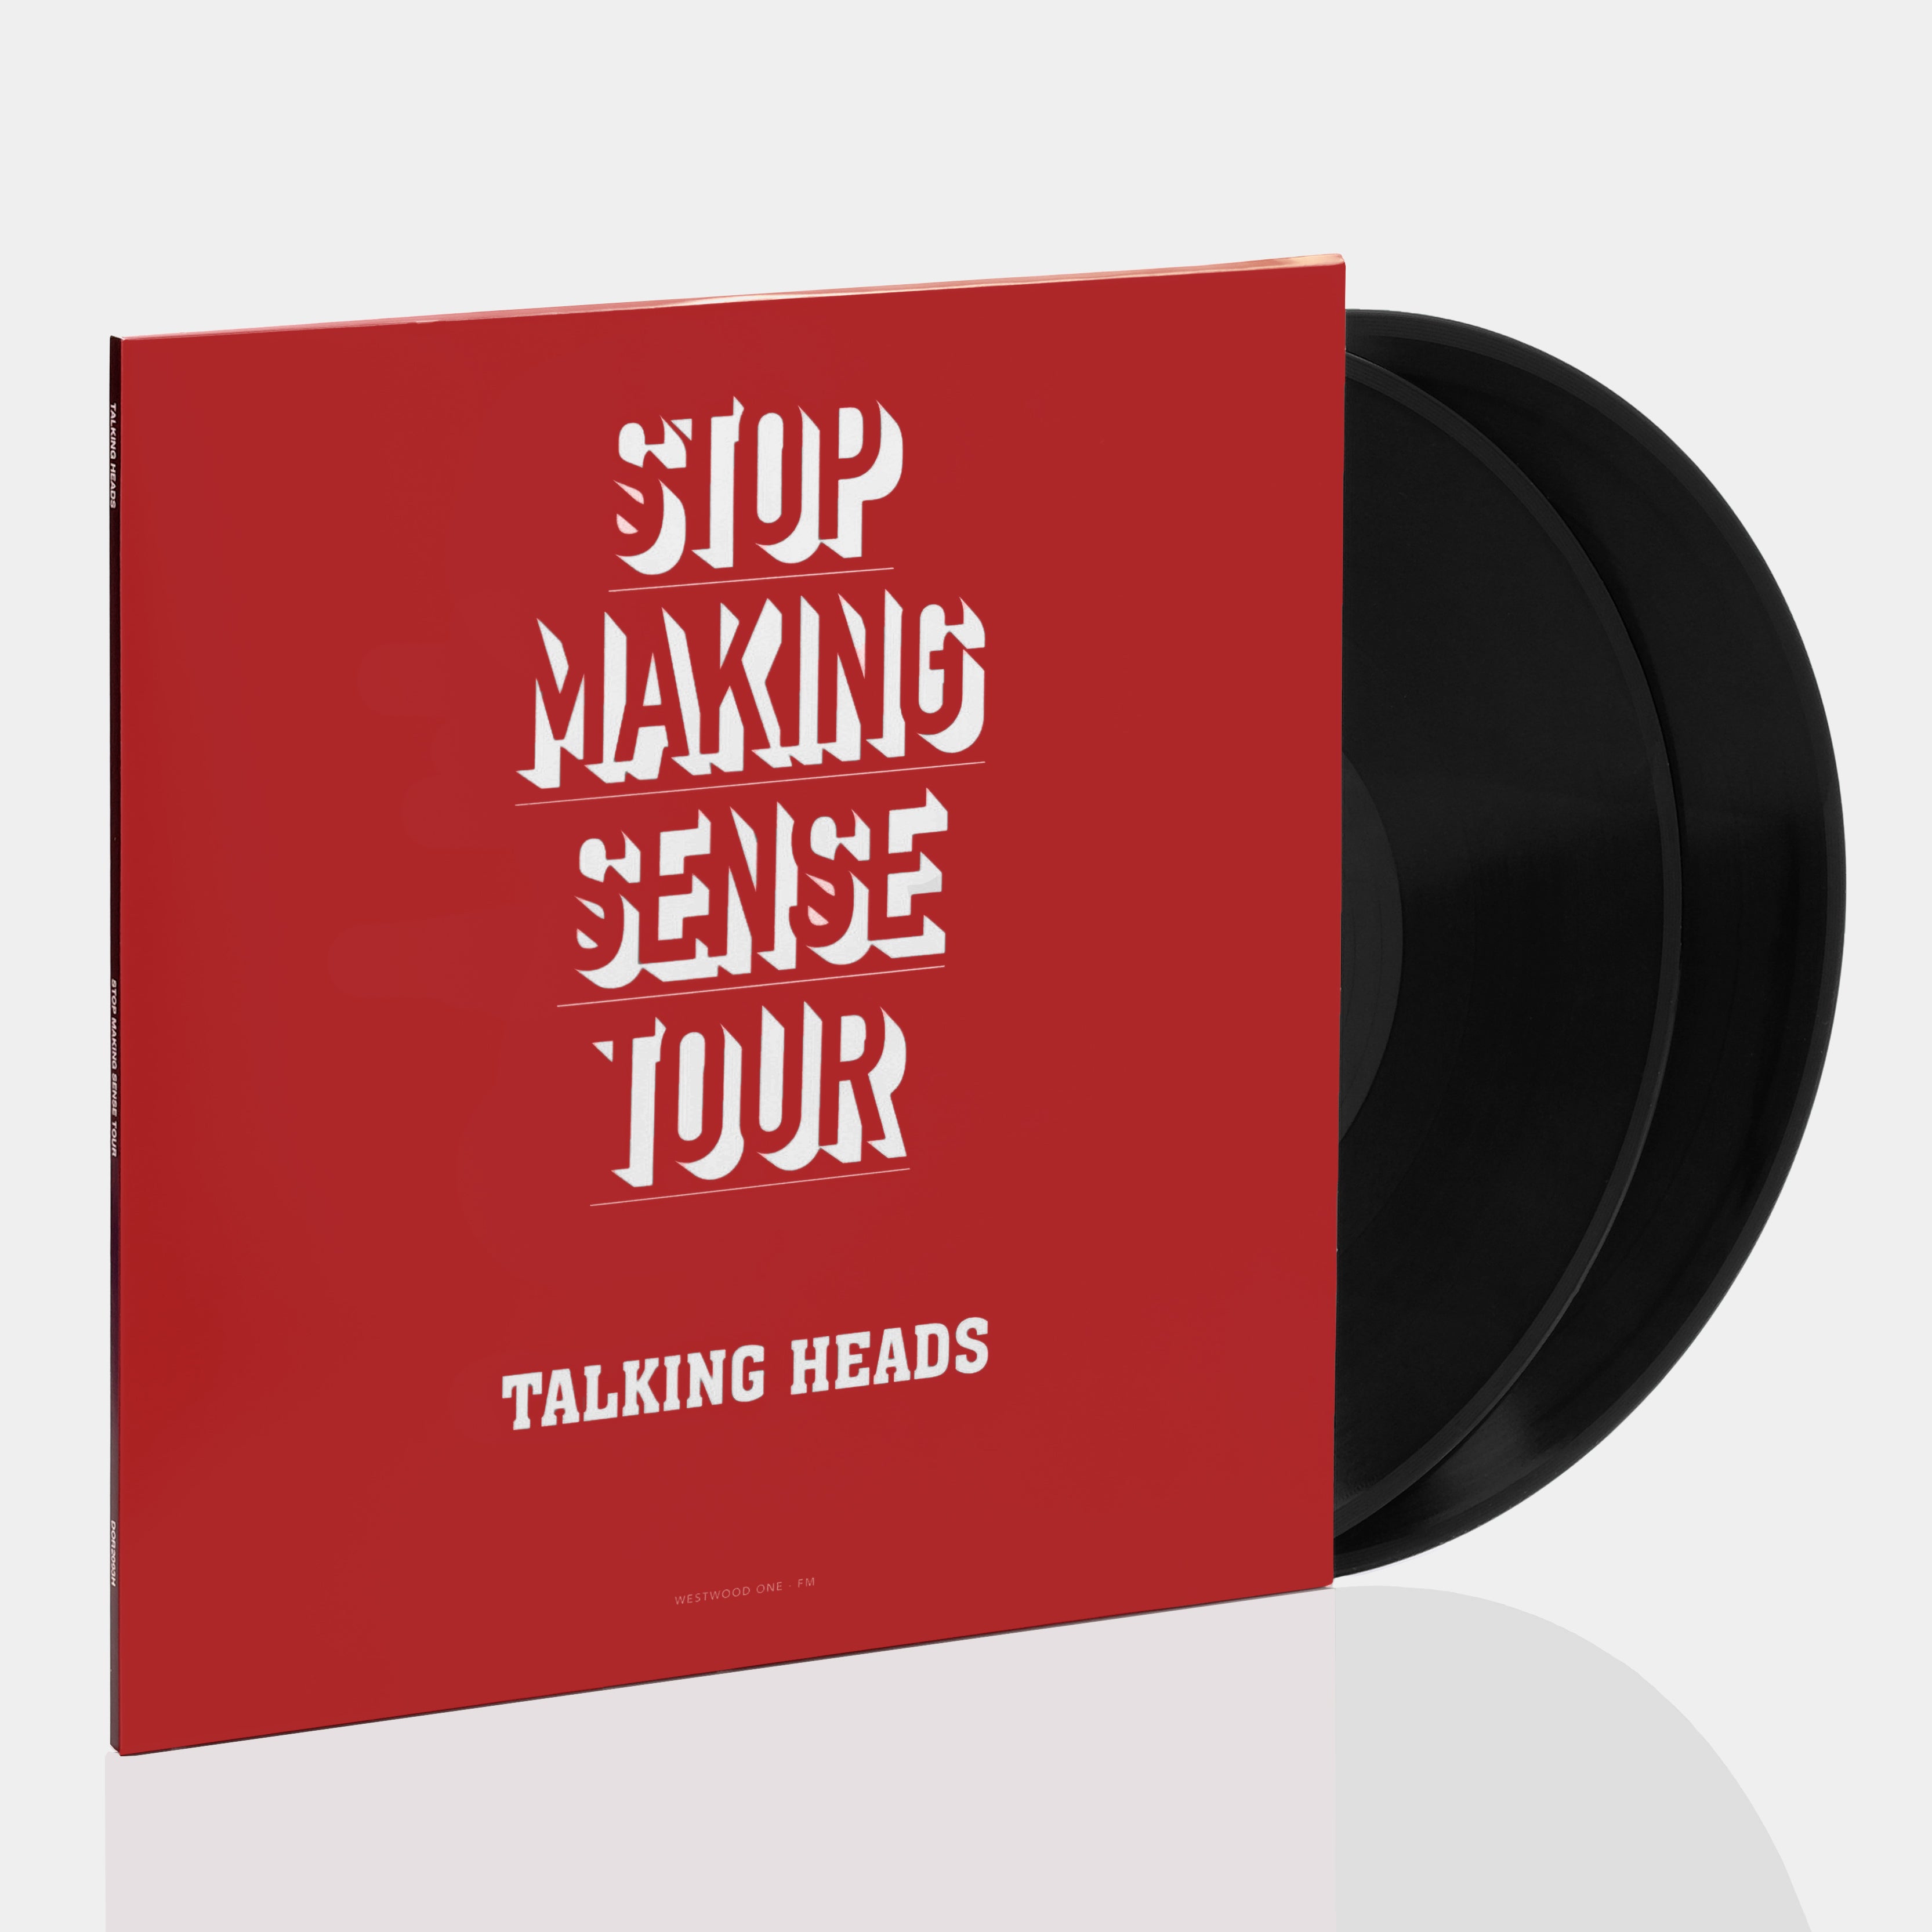 Talking Heads - Stop Making Sense Tour 2xLP Green Vinyl Record